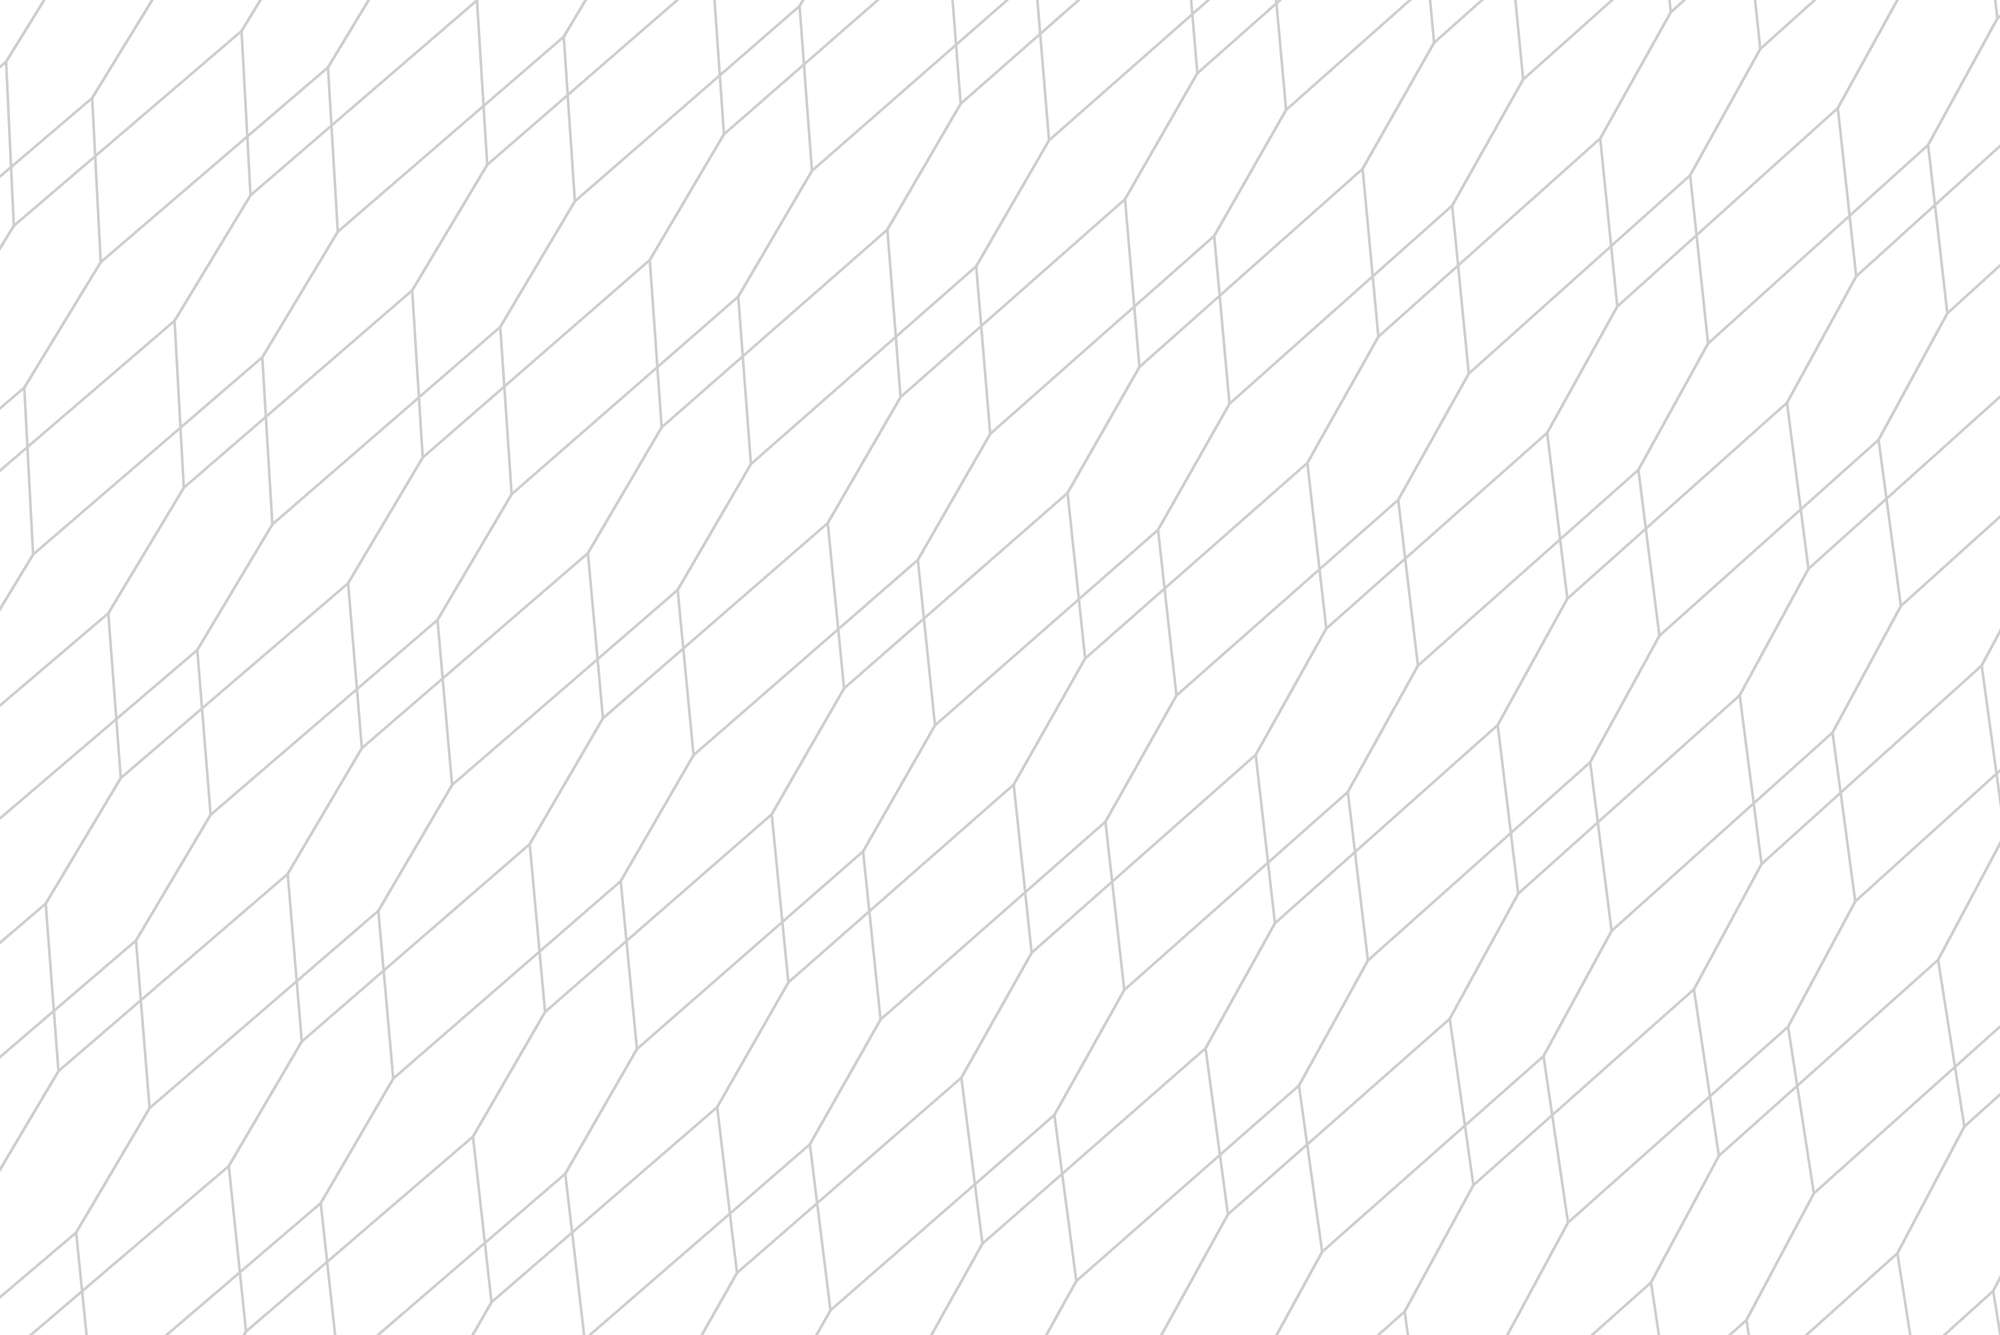             Carta da parati design con motivo esagonale grigio su tessuto non tessuto liscio opaco
        